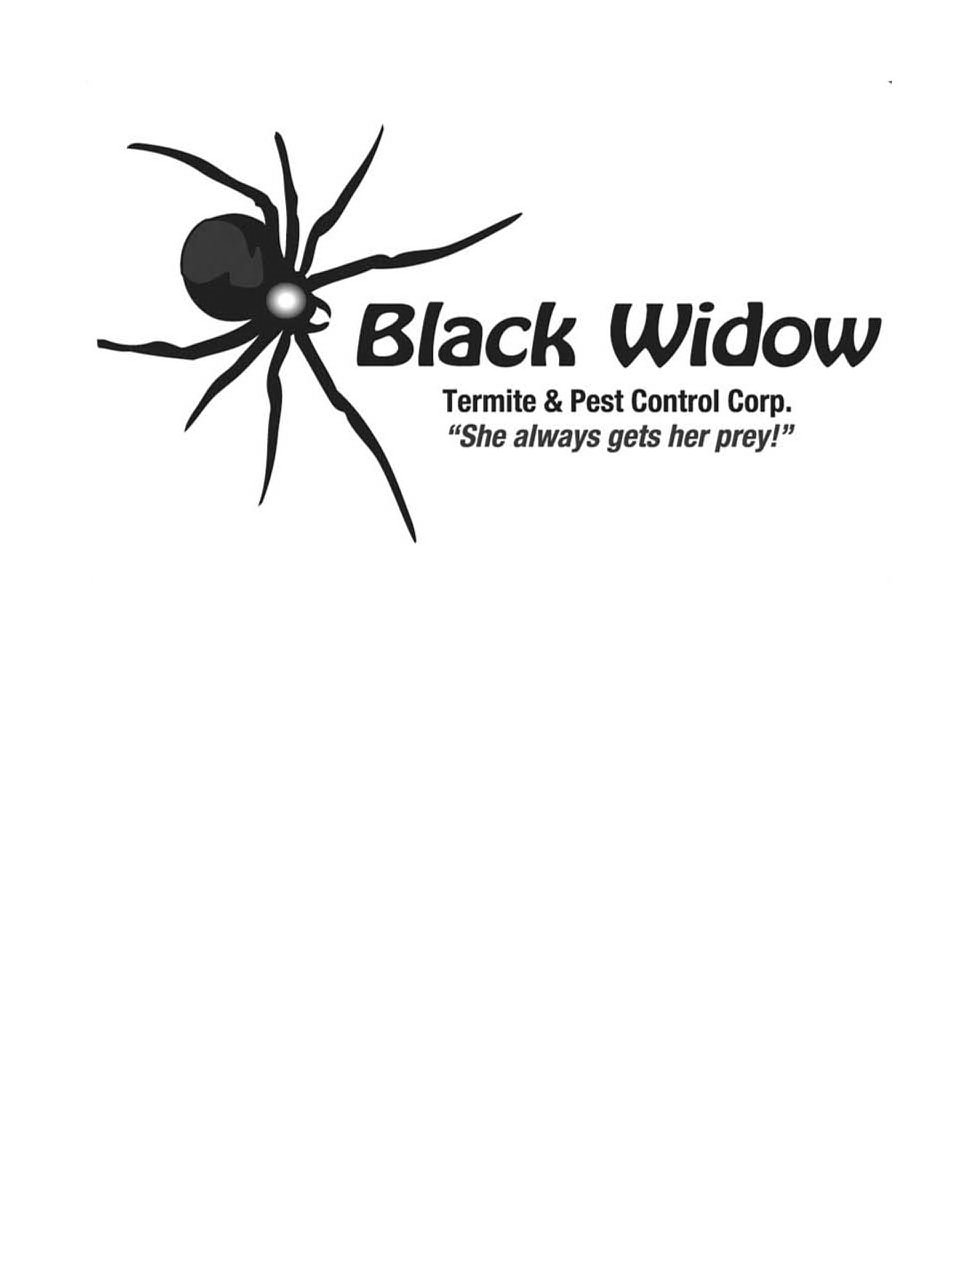  BLACK WIDOW TERMITE &amp; PEST CONTROL CORP. - "SHE ALWAYS GETS HER PREY!"